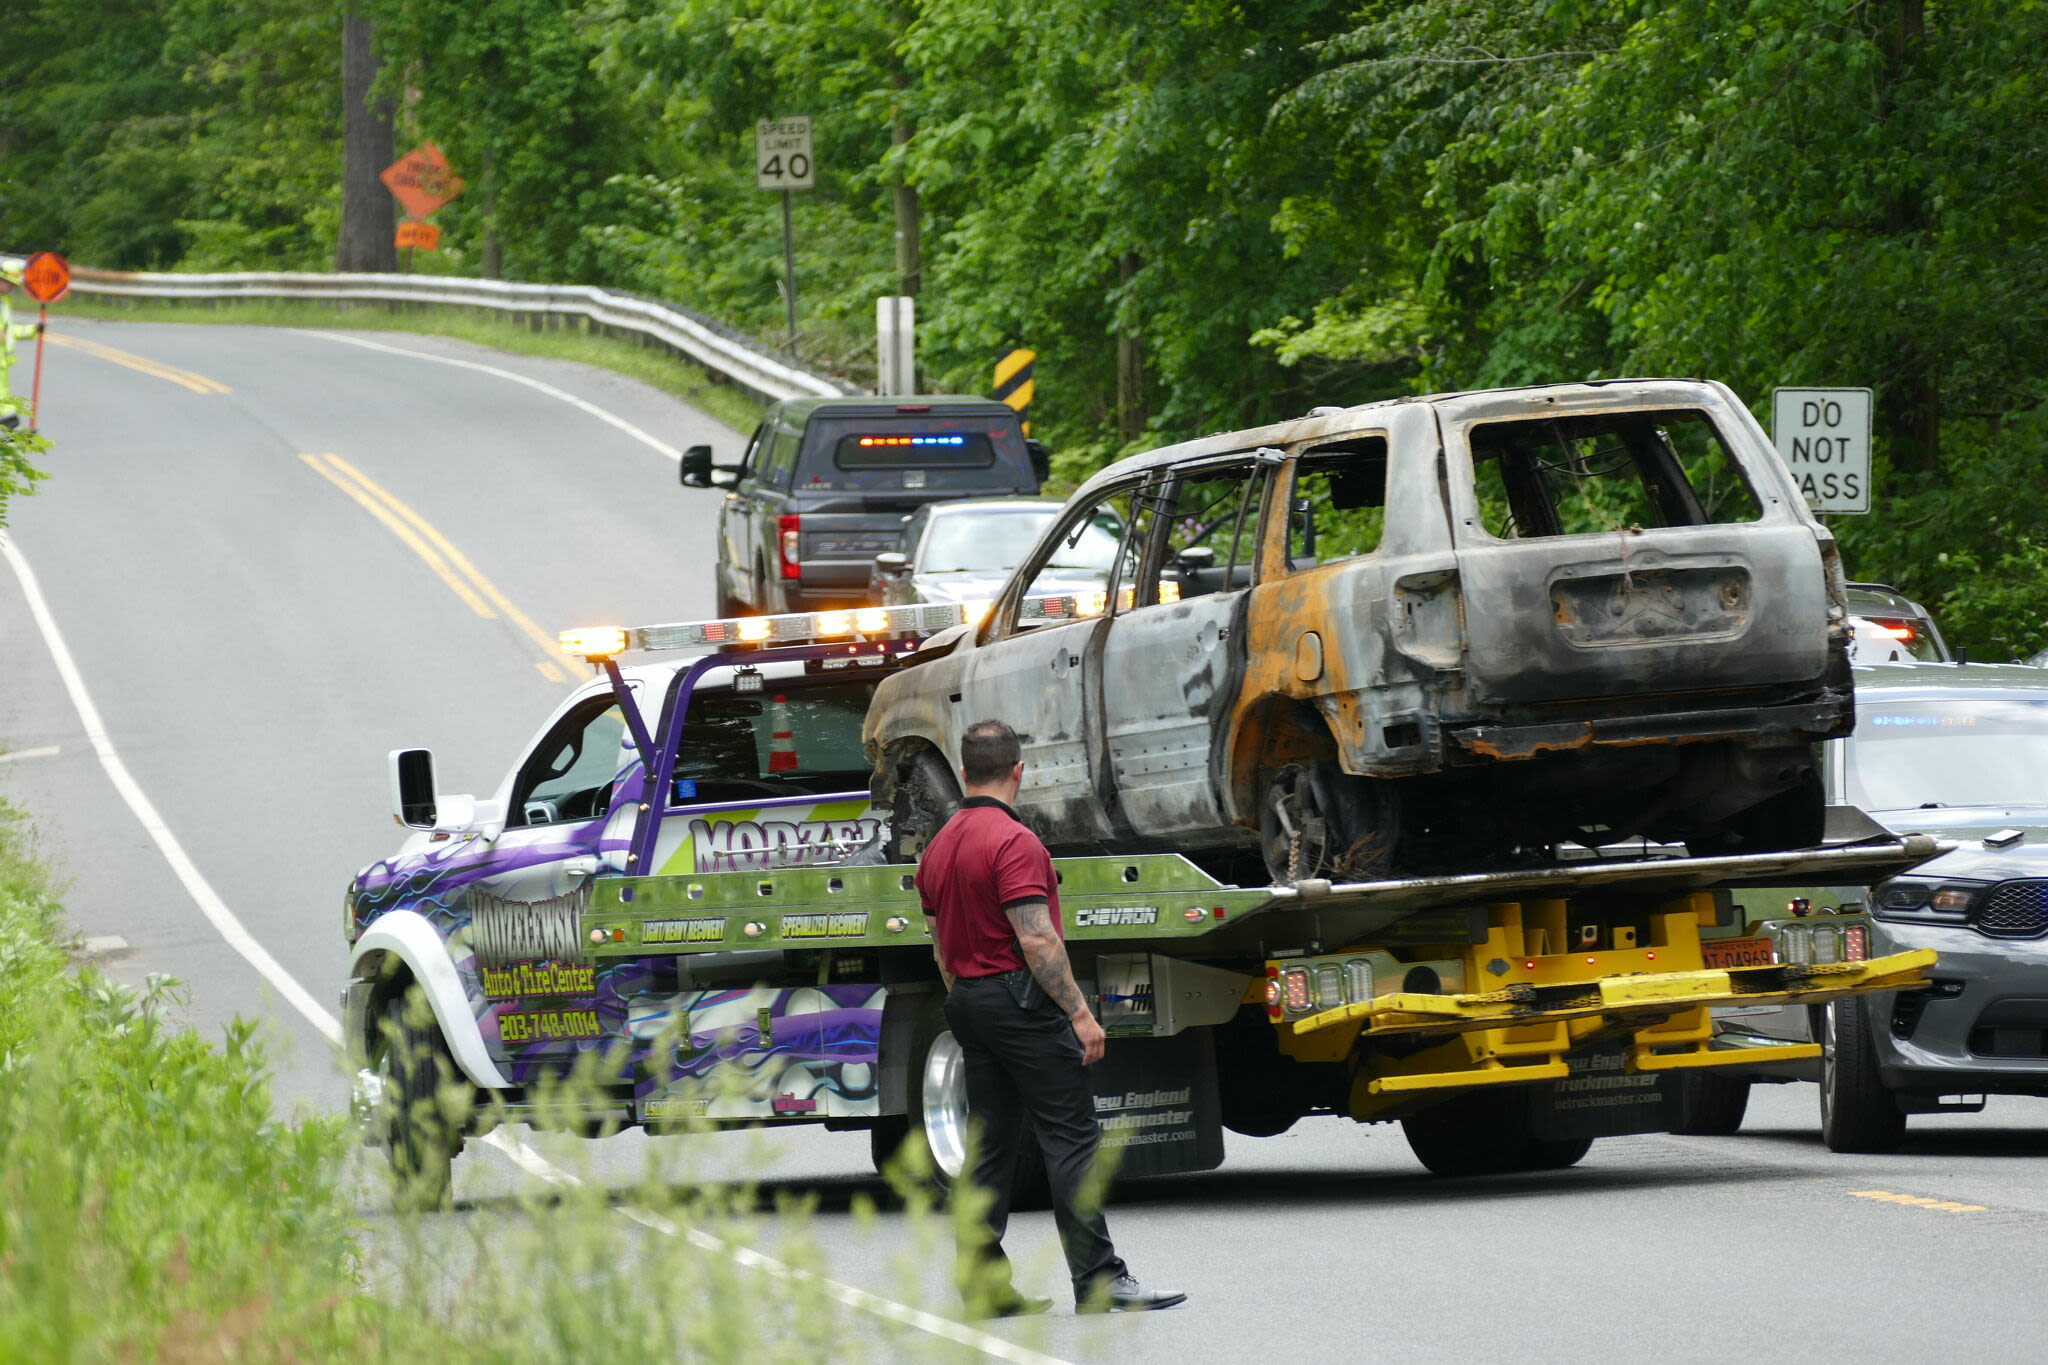 Bodies found in burning car in Oxford identified as Hartford men, police say